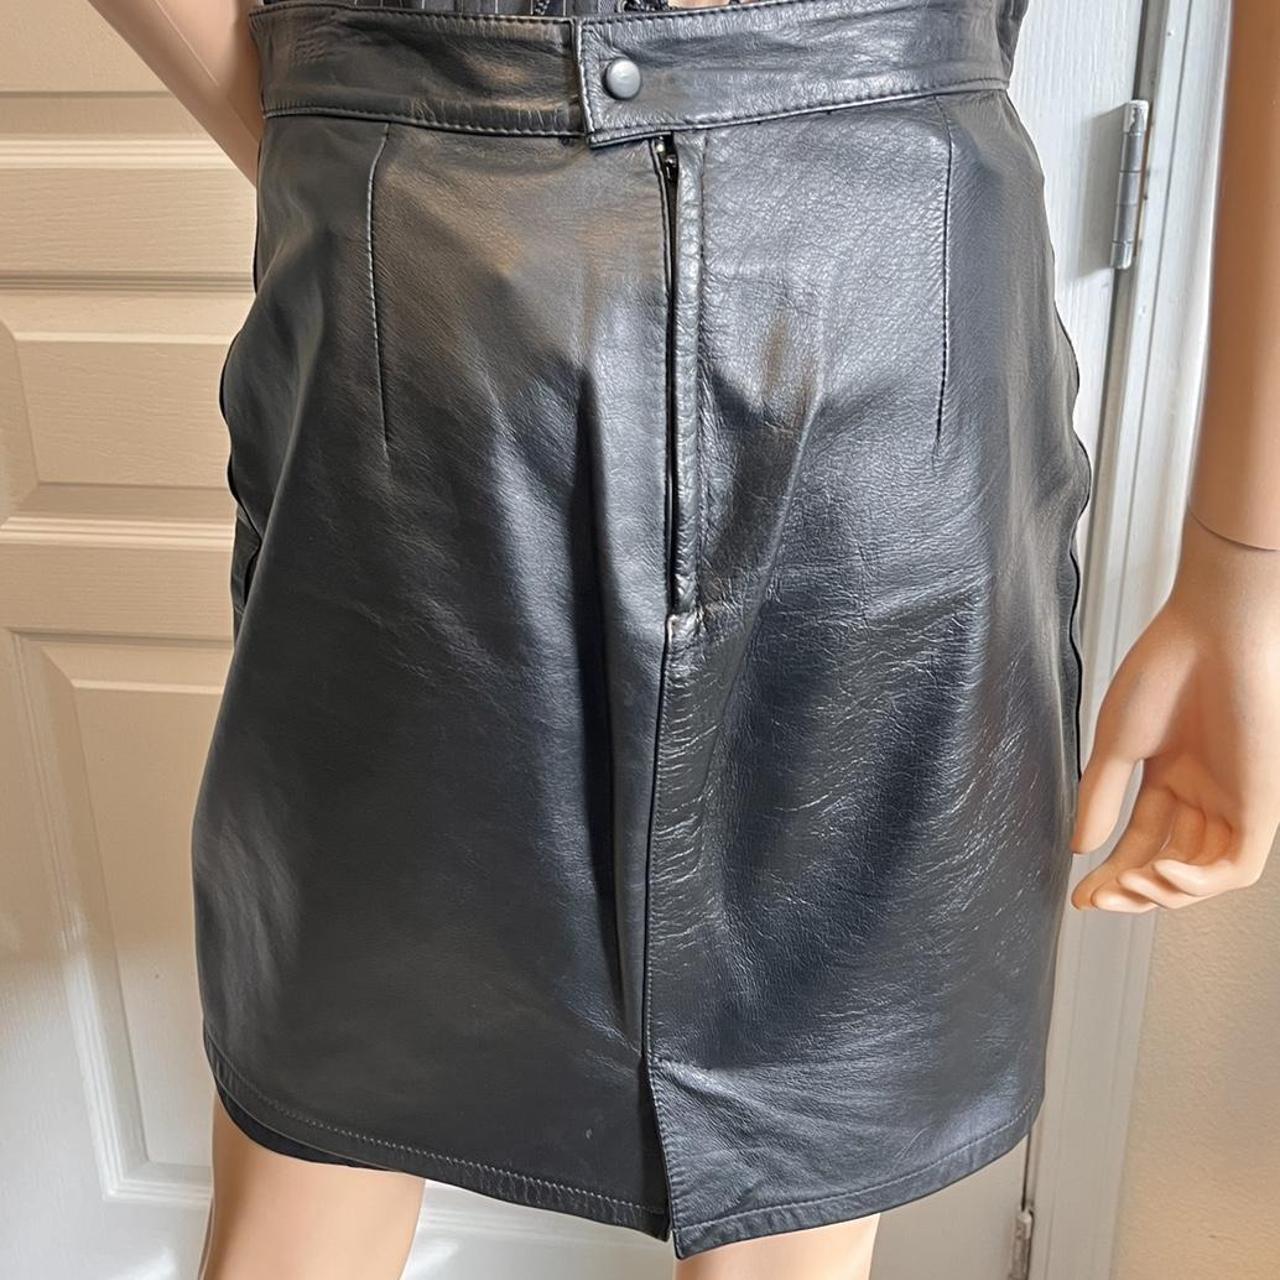 Vintage Pelle black leather skirt Genuine... - Depop